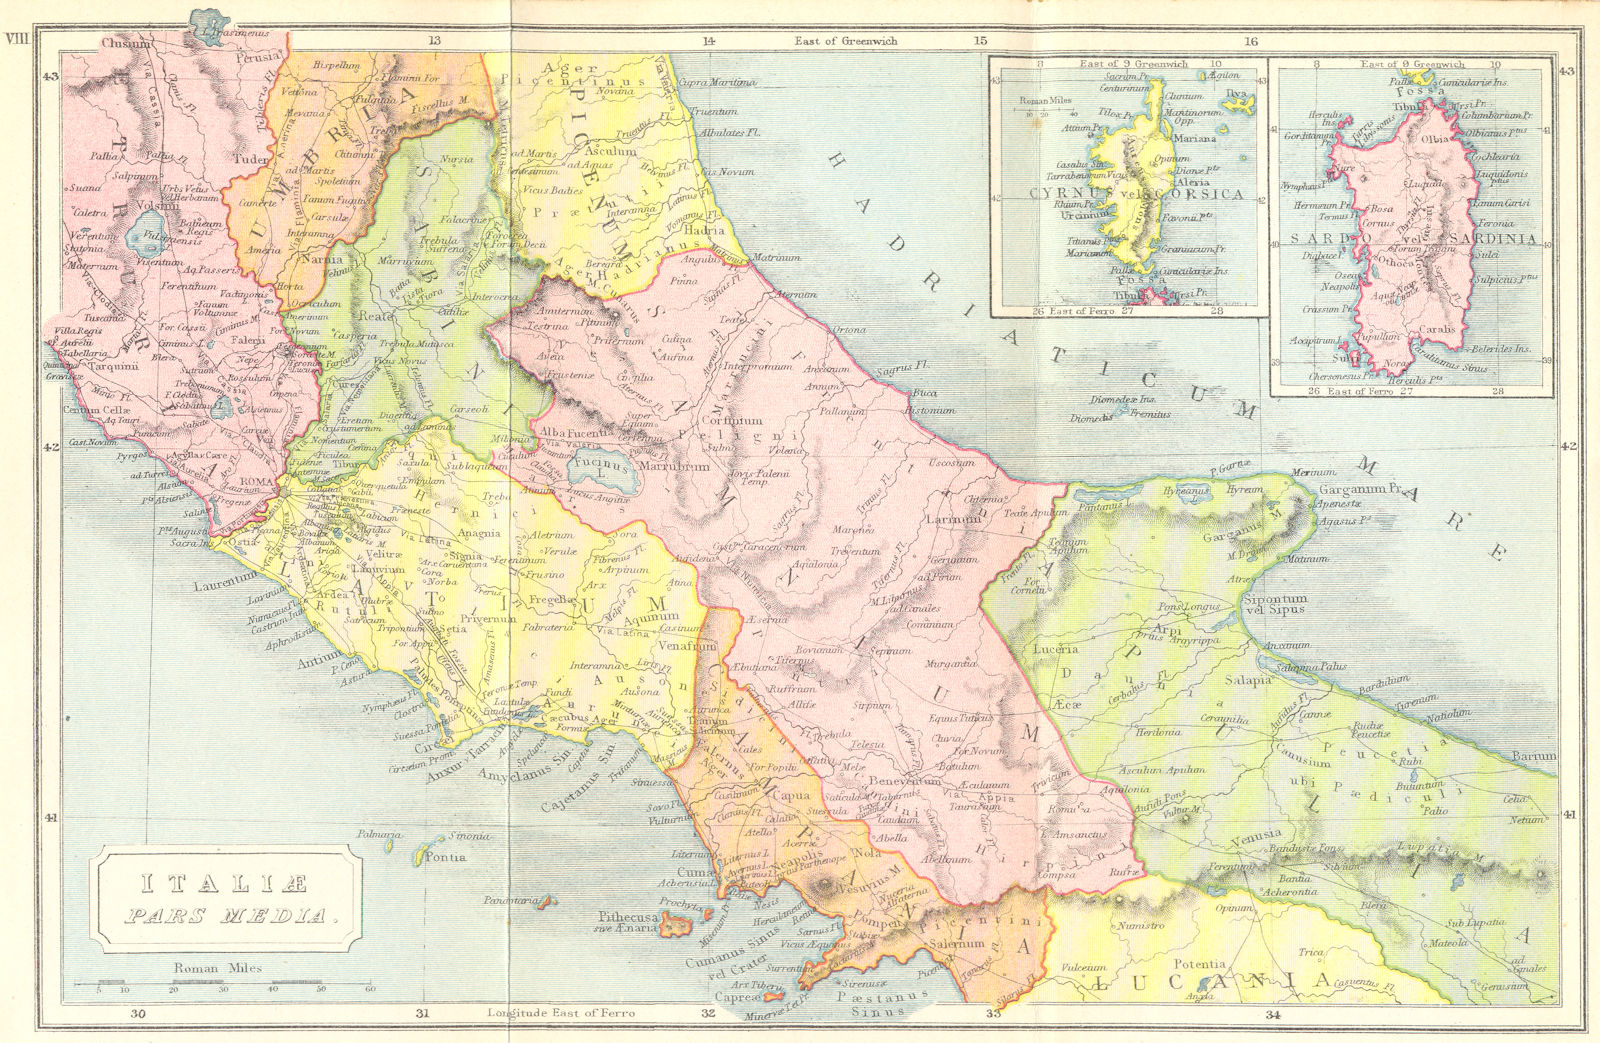 ITALY. Middle; Cyrnus vel Corsica Sardo Sardinia 1908 old antique map chart